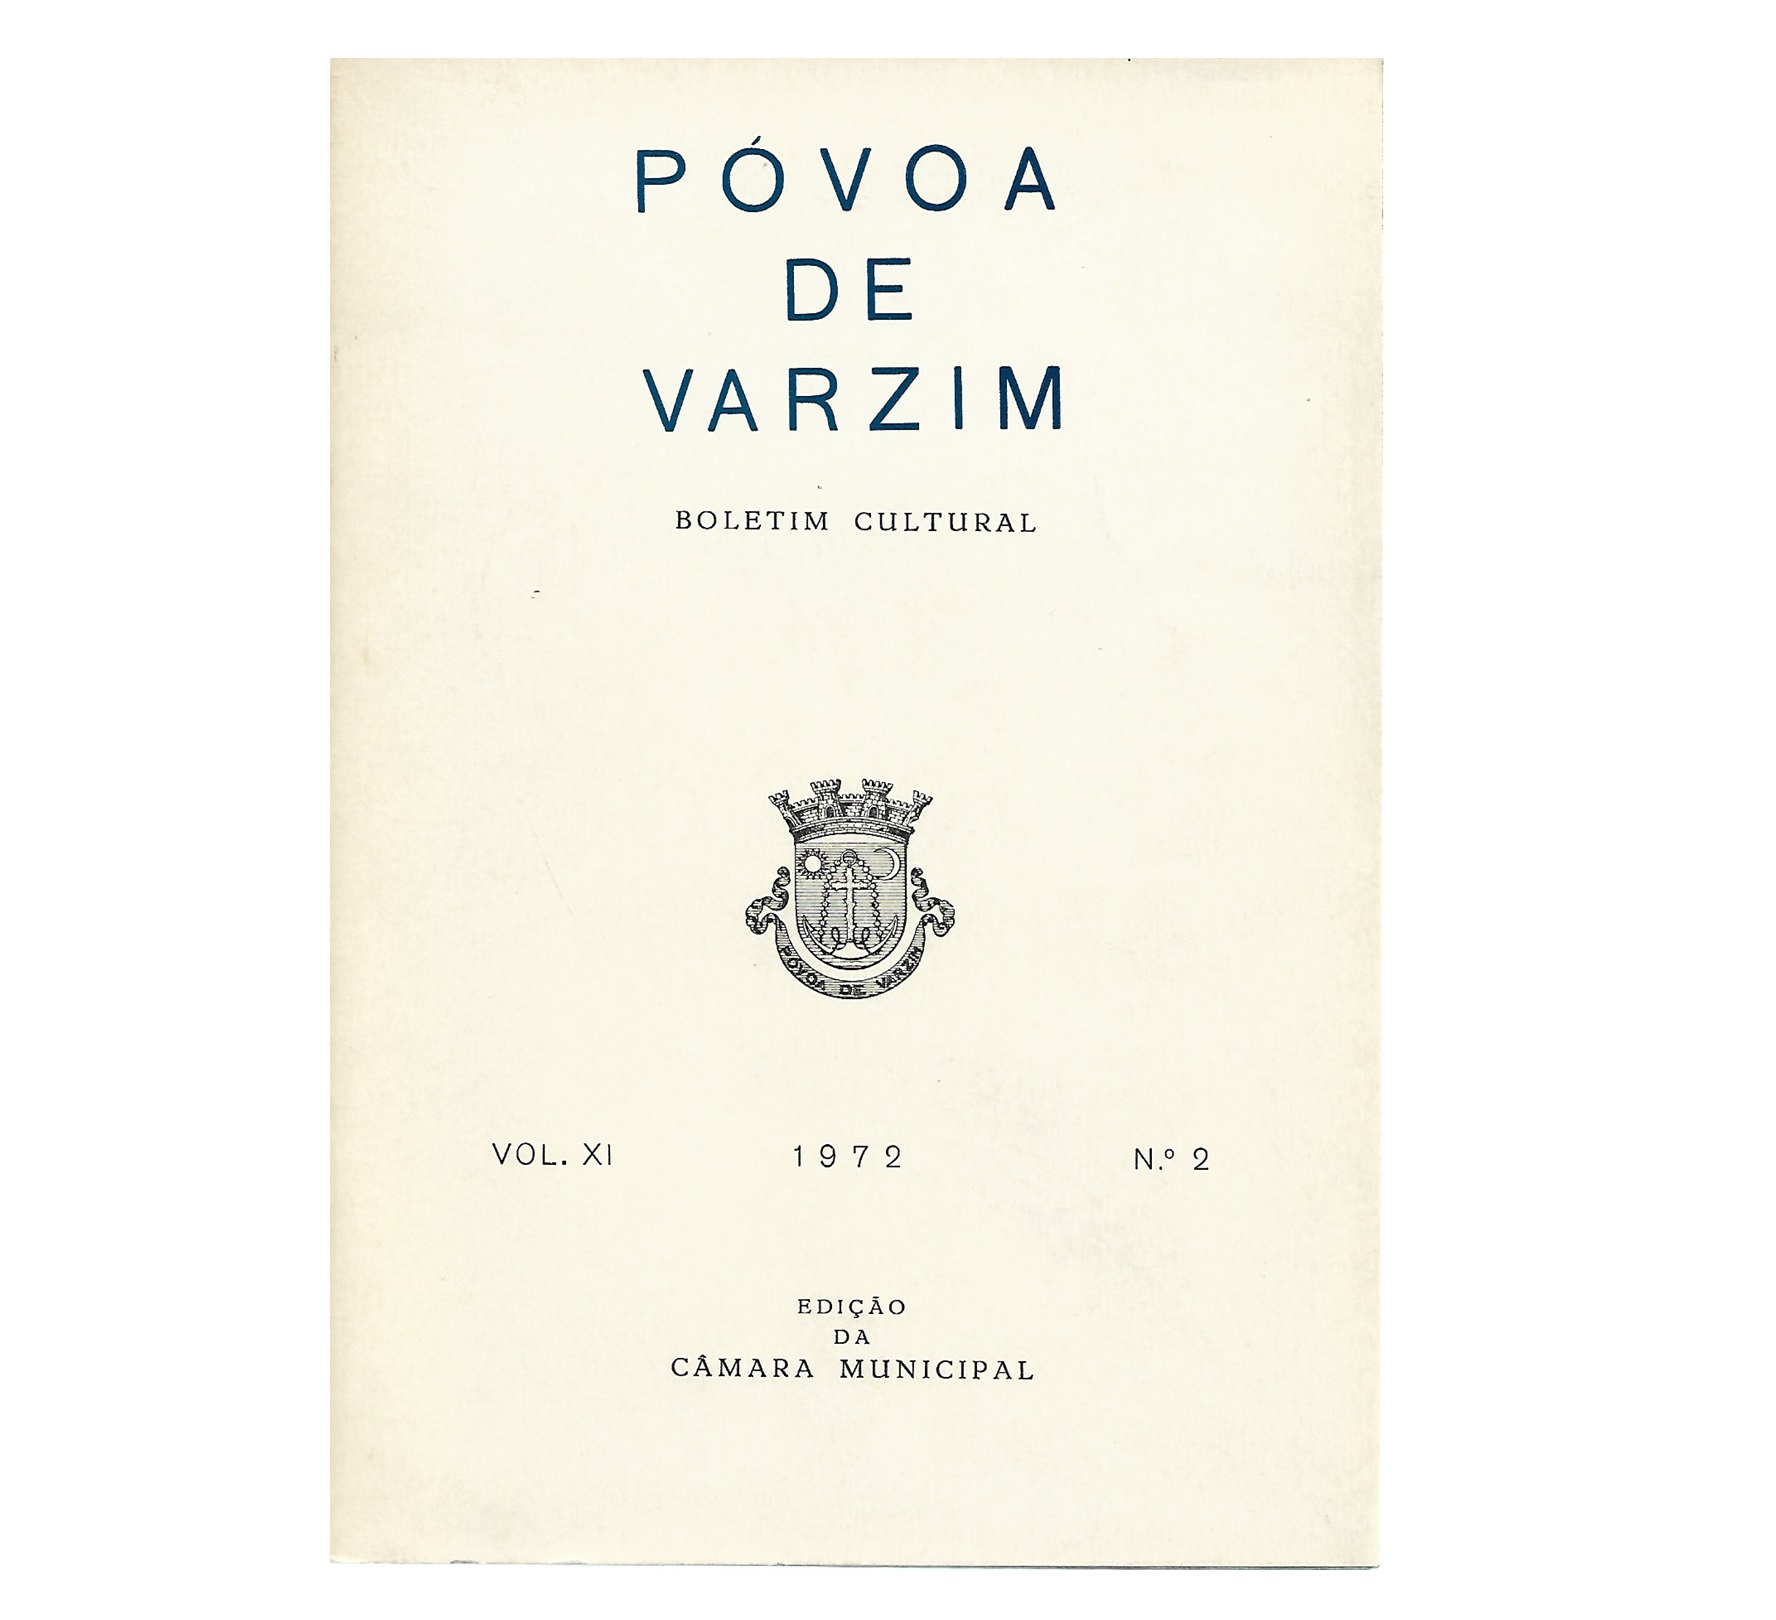 PÓVOA DE VARZIM BOLETIM C. VOL. XI, N.º 2, 1972.